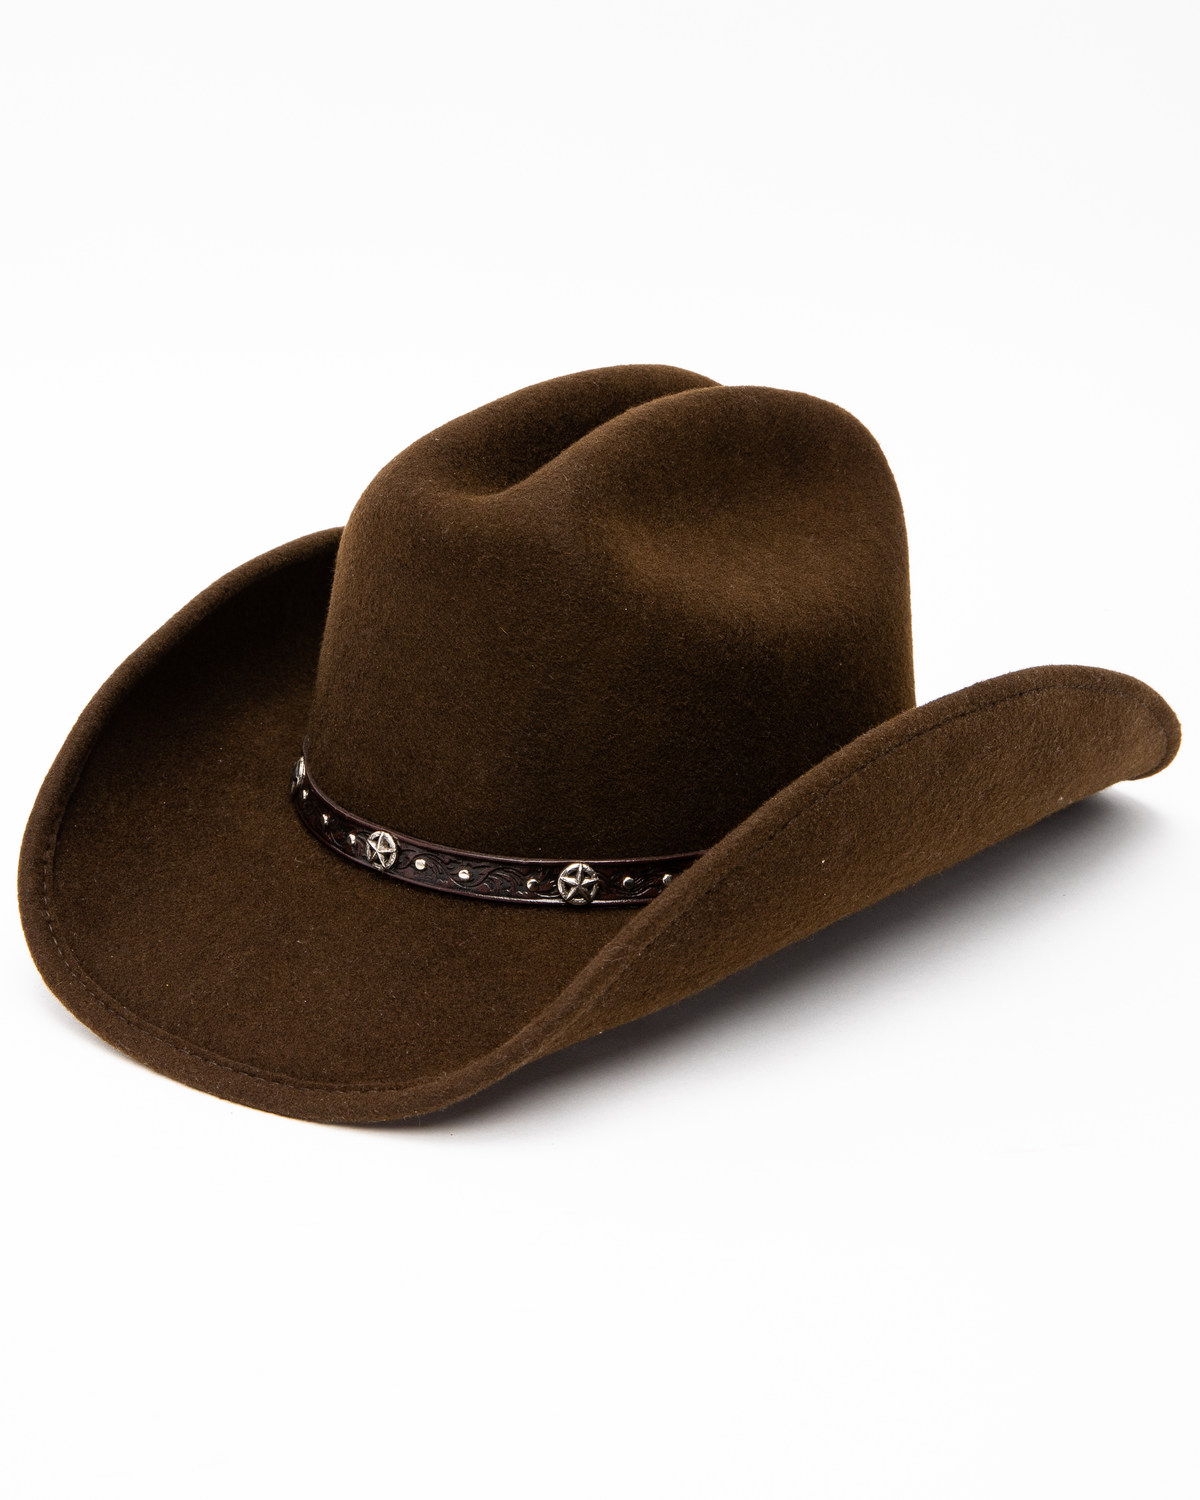 Cody James Crushable Felt Cowboy Hat